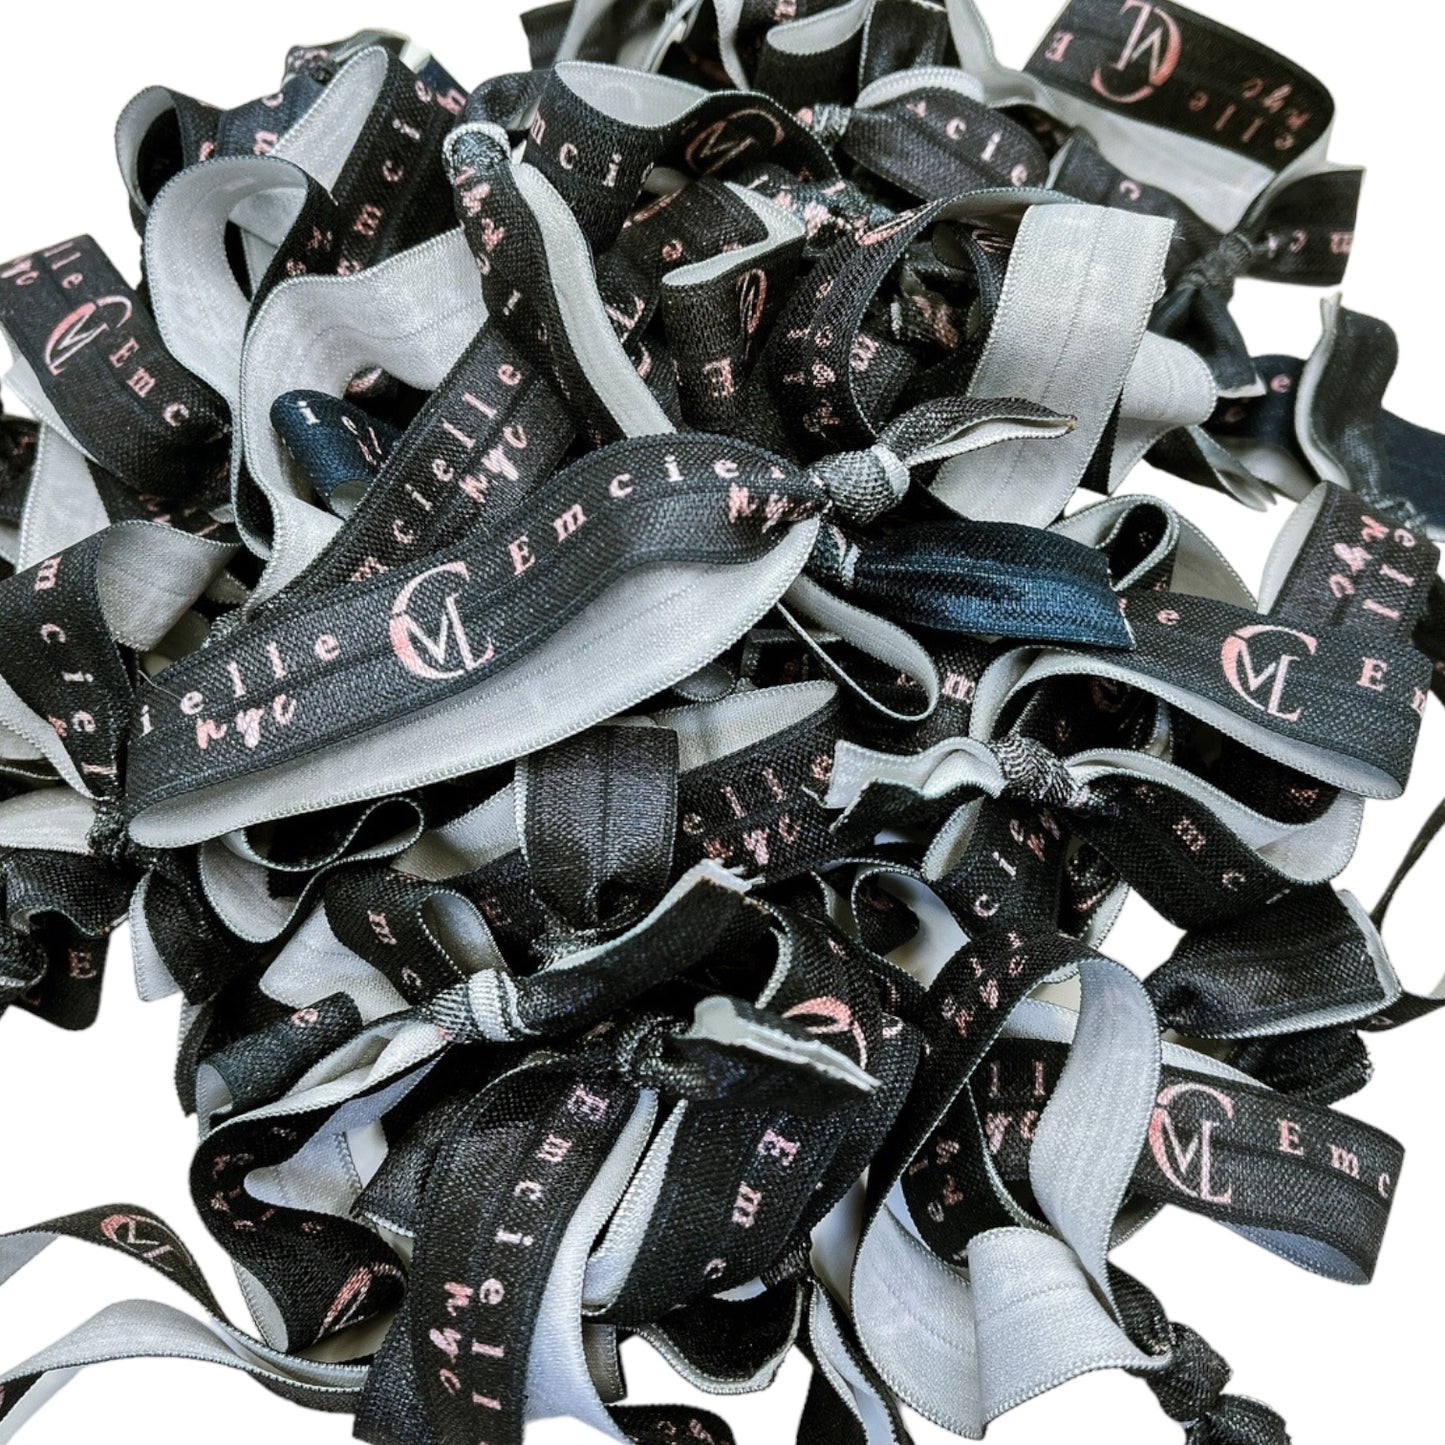 Custom Hair Tie Bracelets - Add your logo and information - Bulk Discounts!